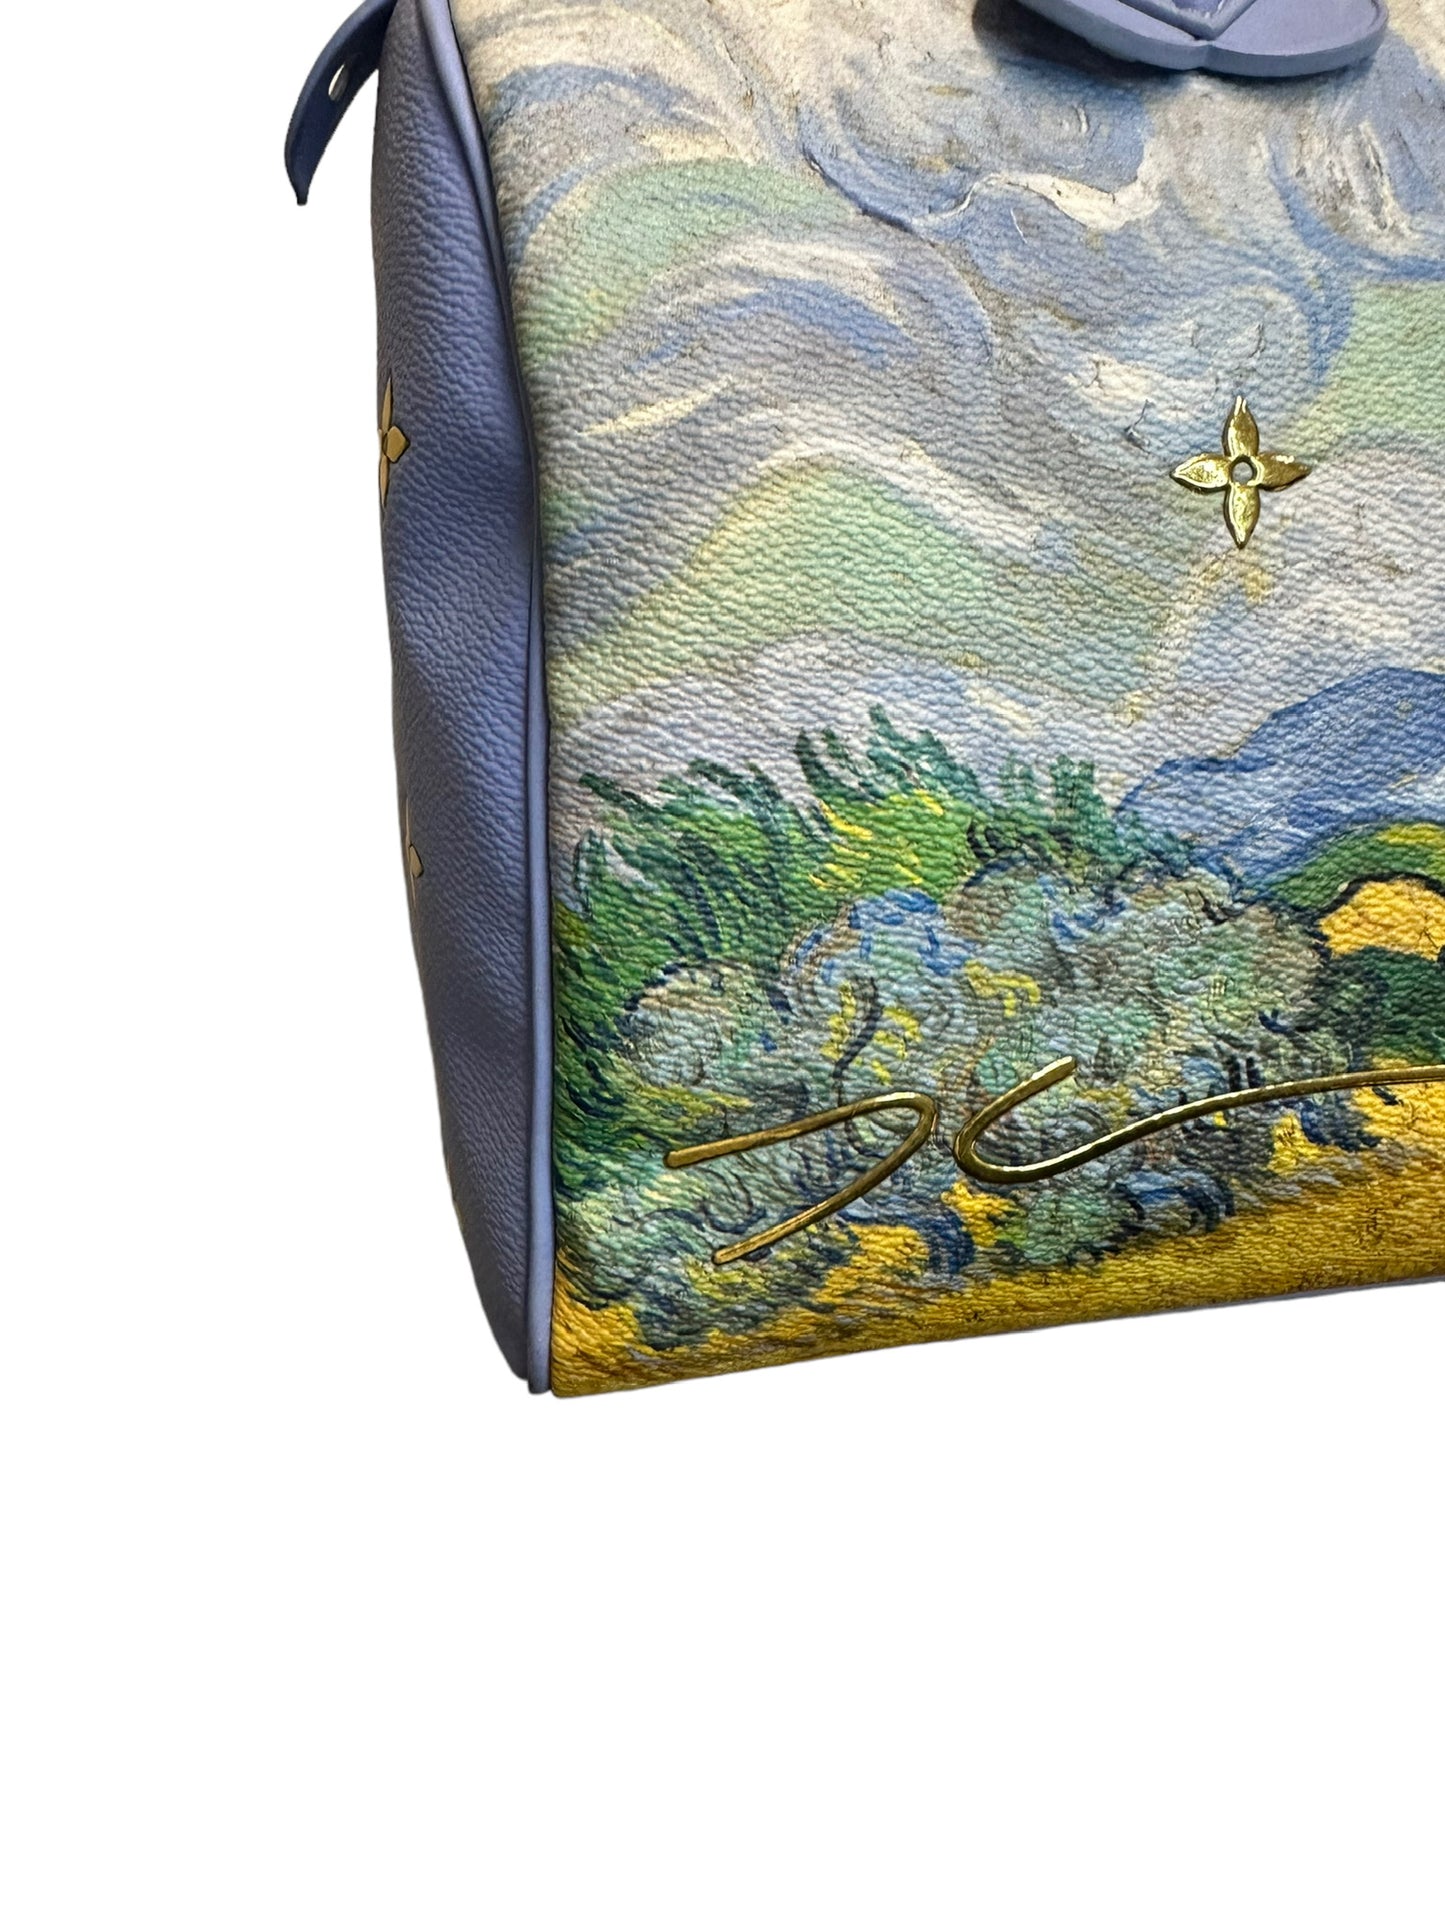 LOUIS VUITTON - Vincent Van Gogh Speedy Limited Edition